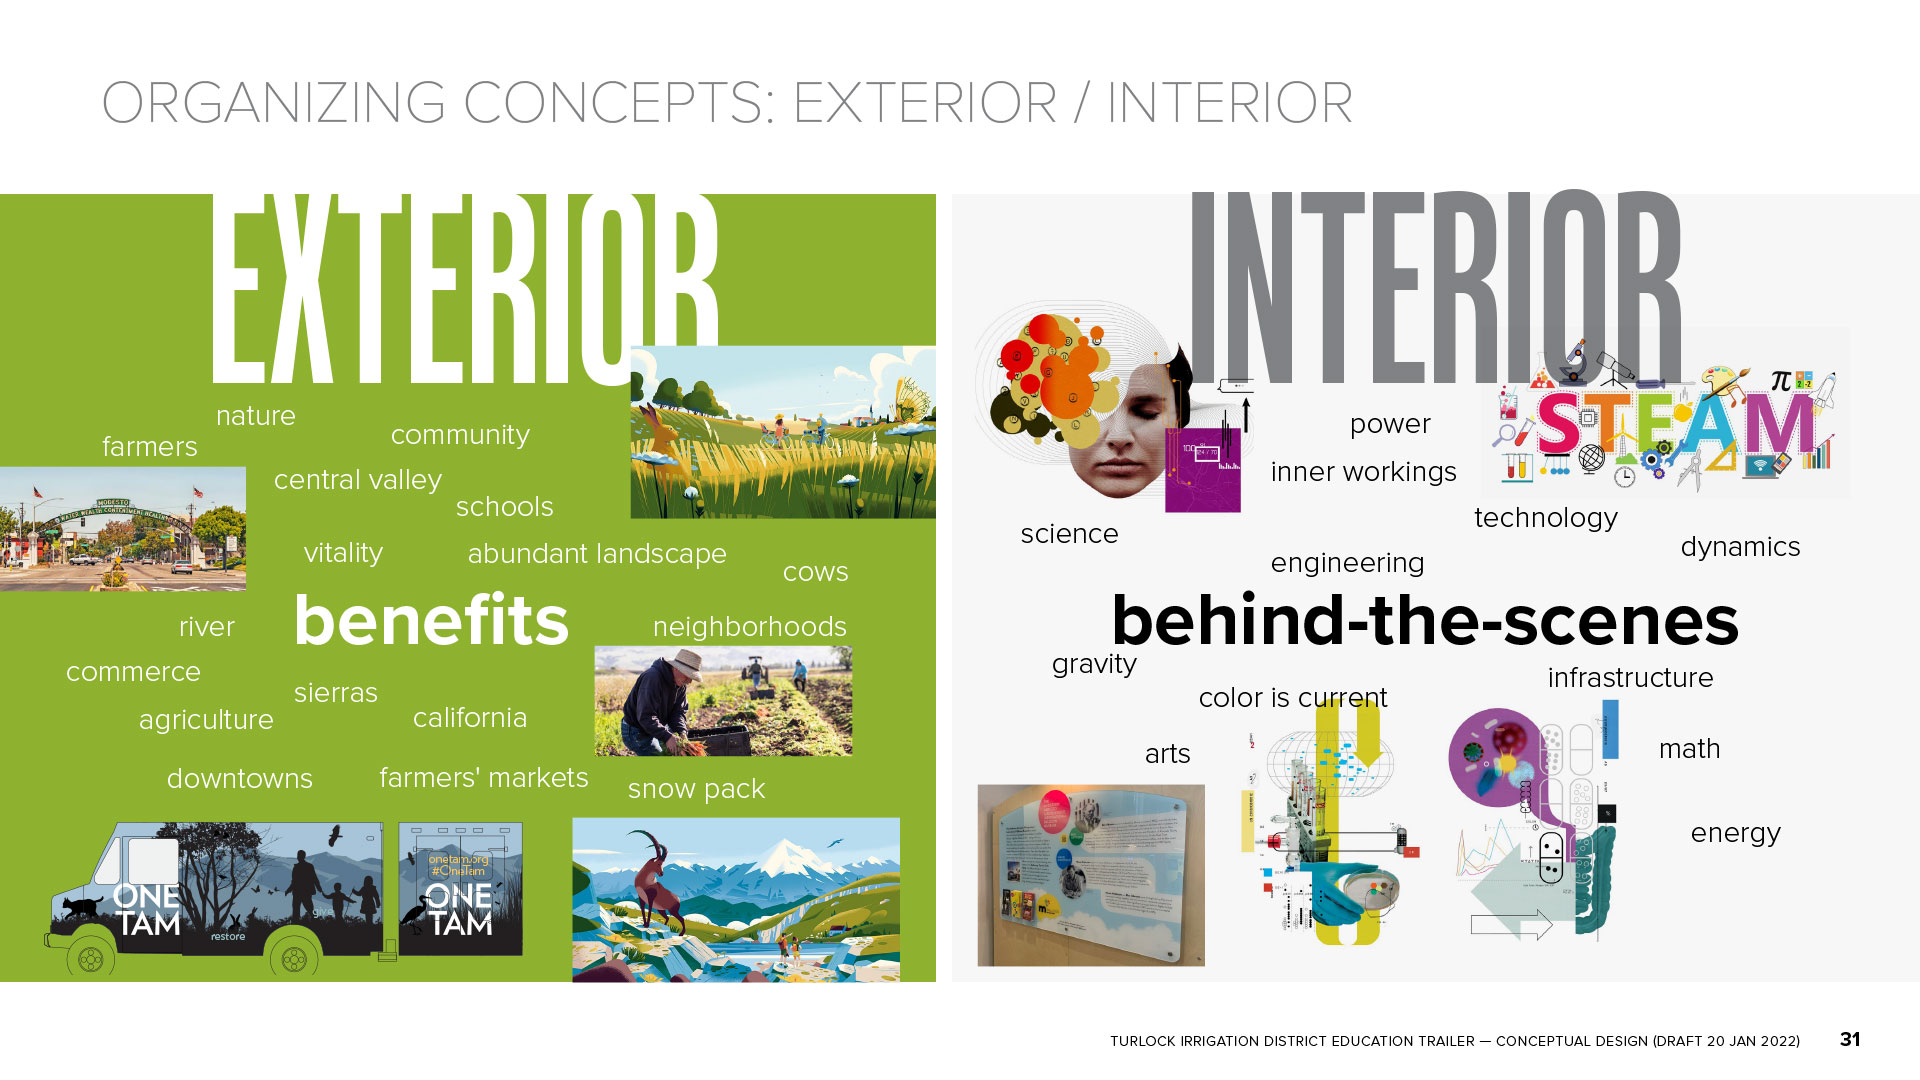 Interior / exterior design approach